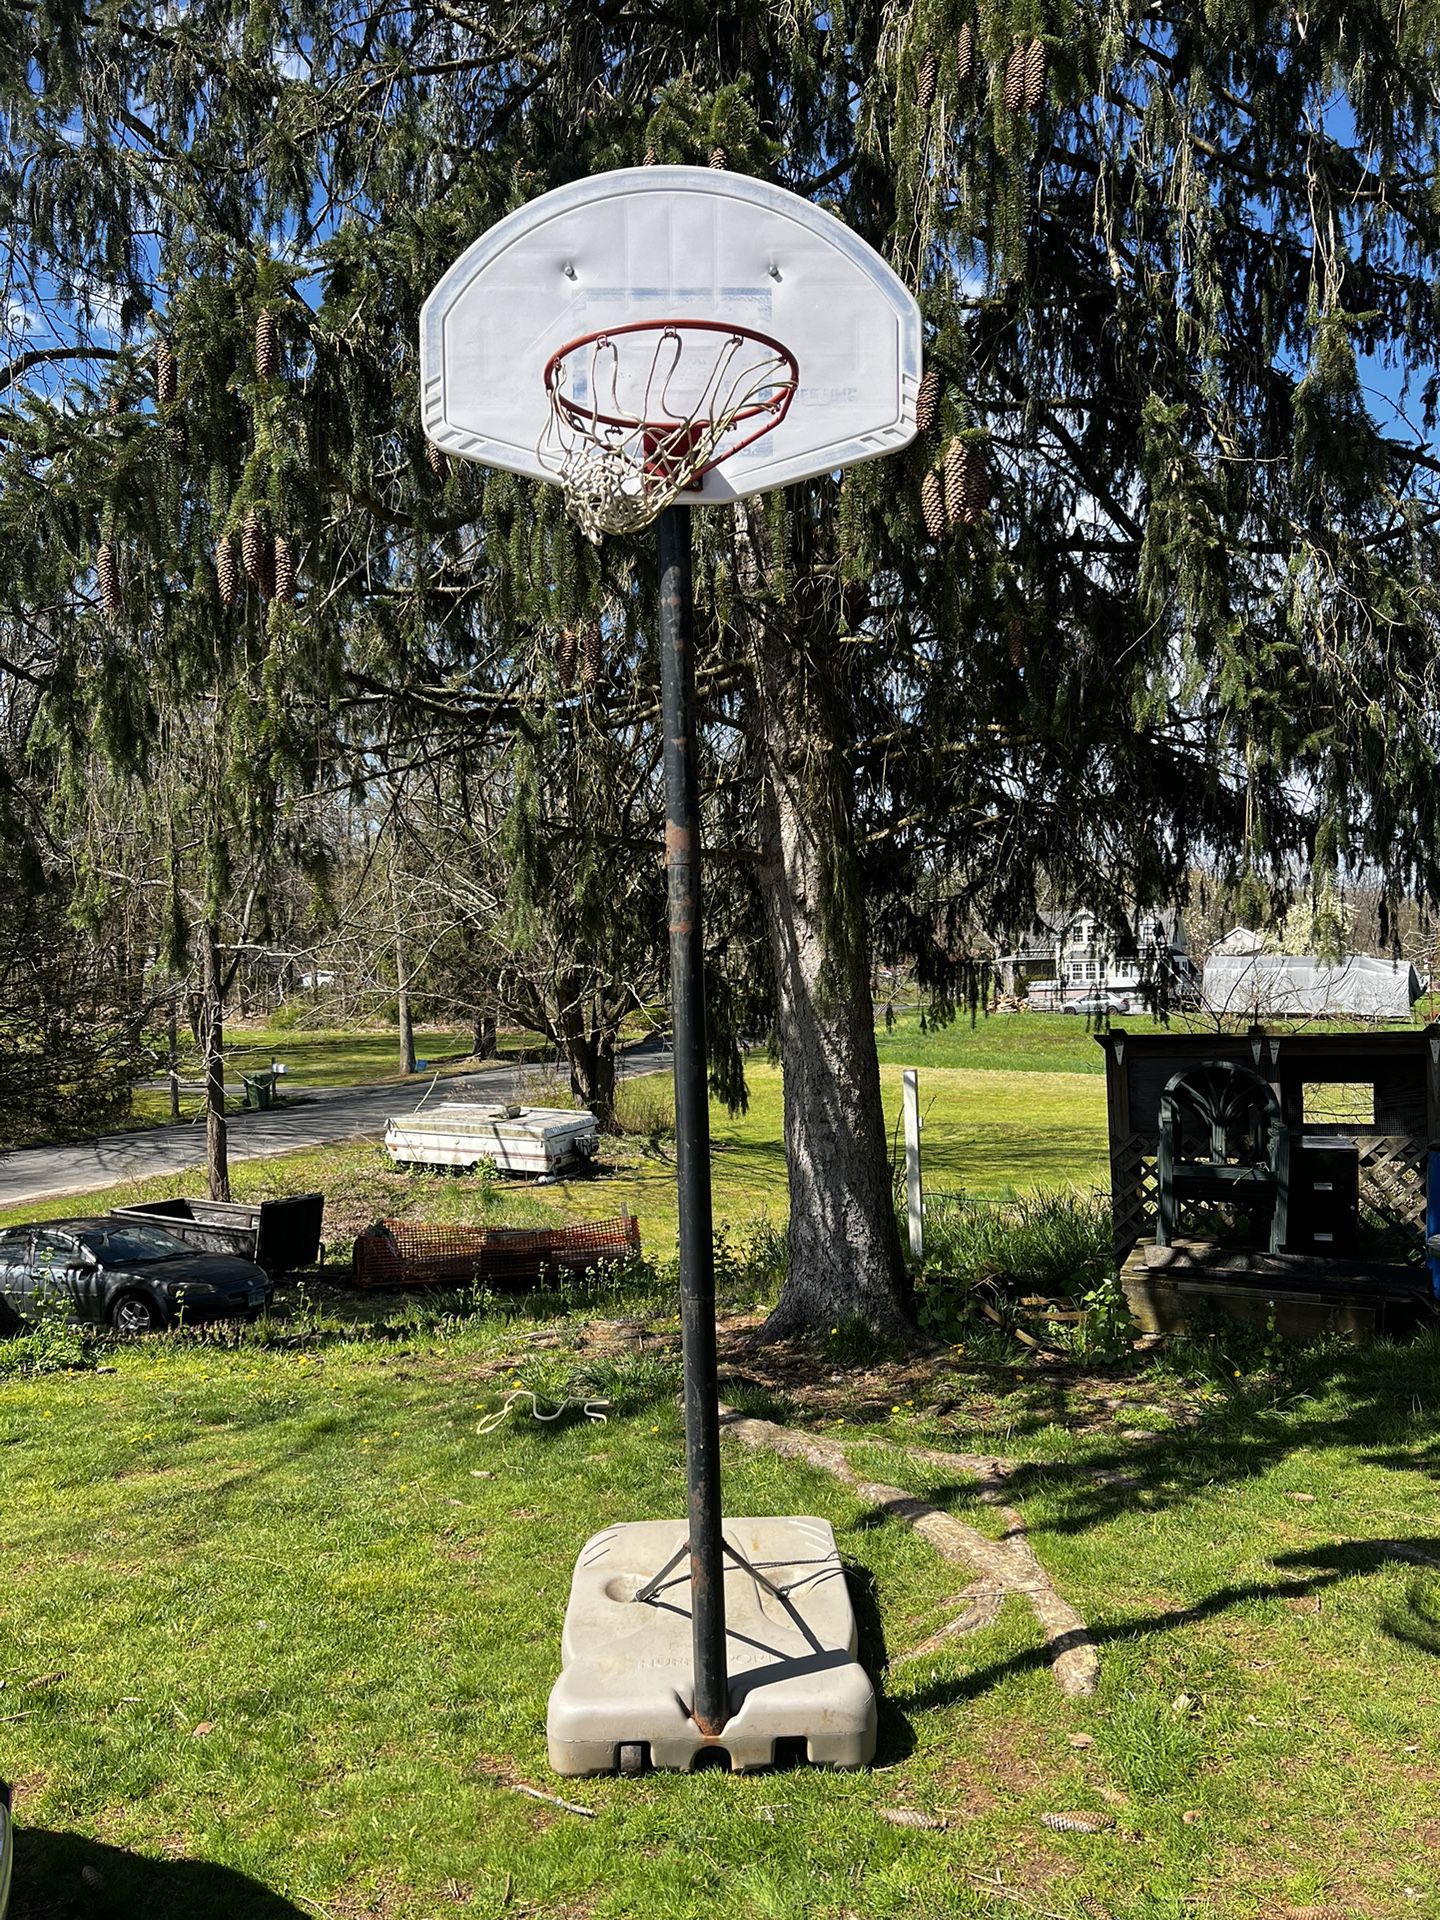 Basketball Hoop with Plastic Ball Return